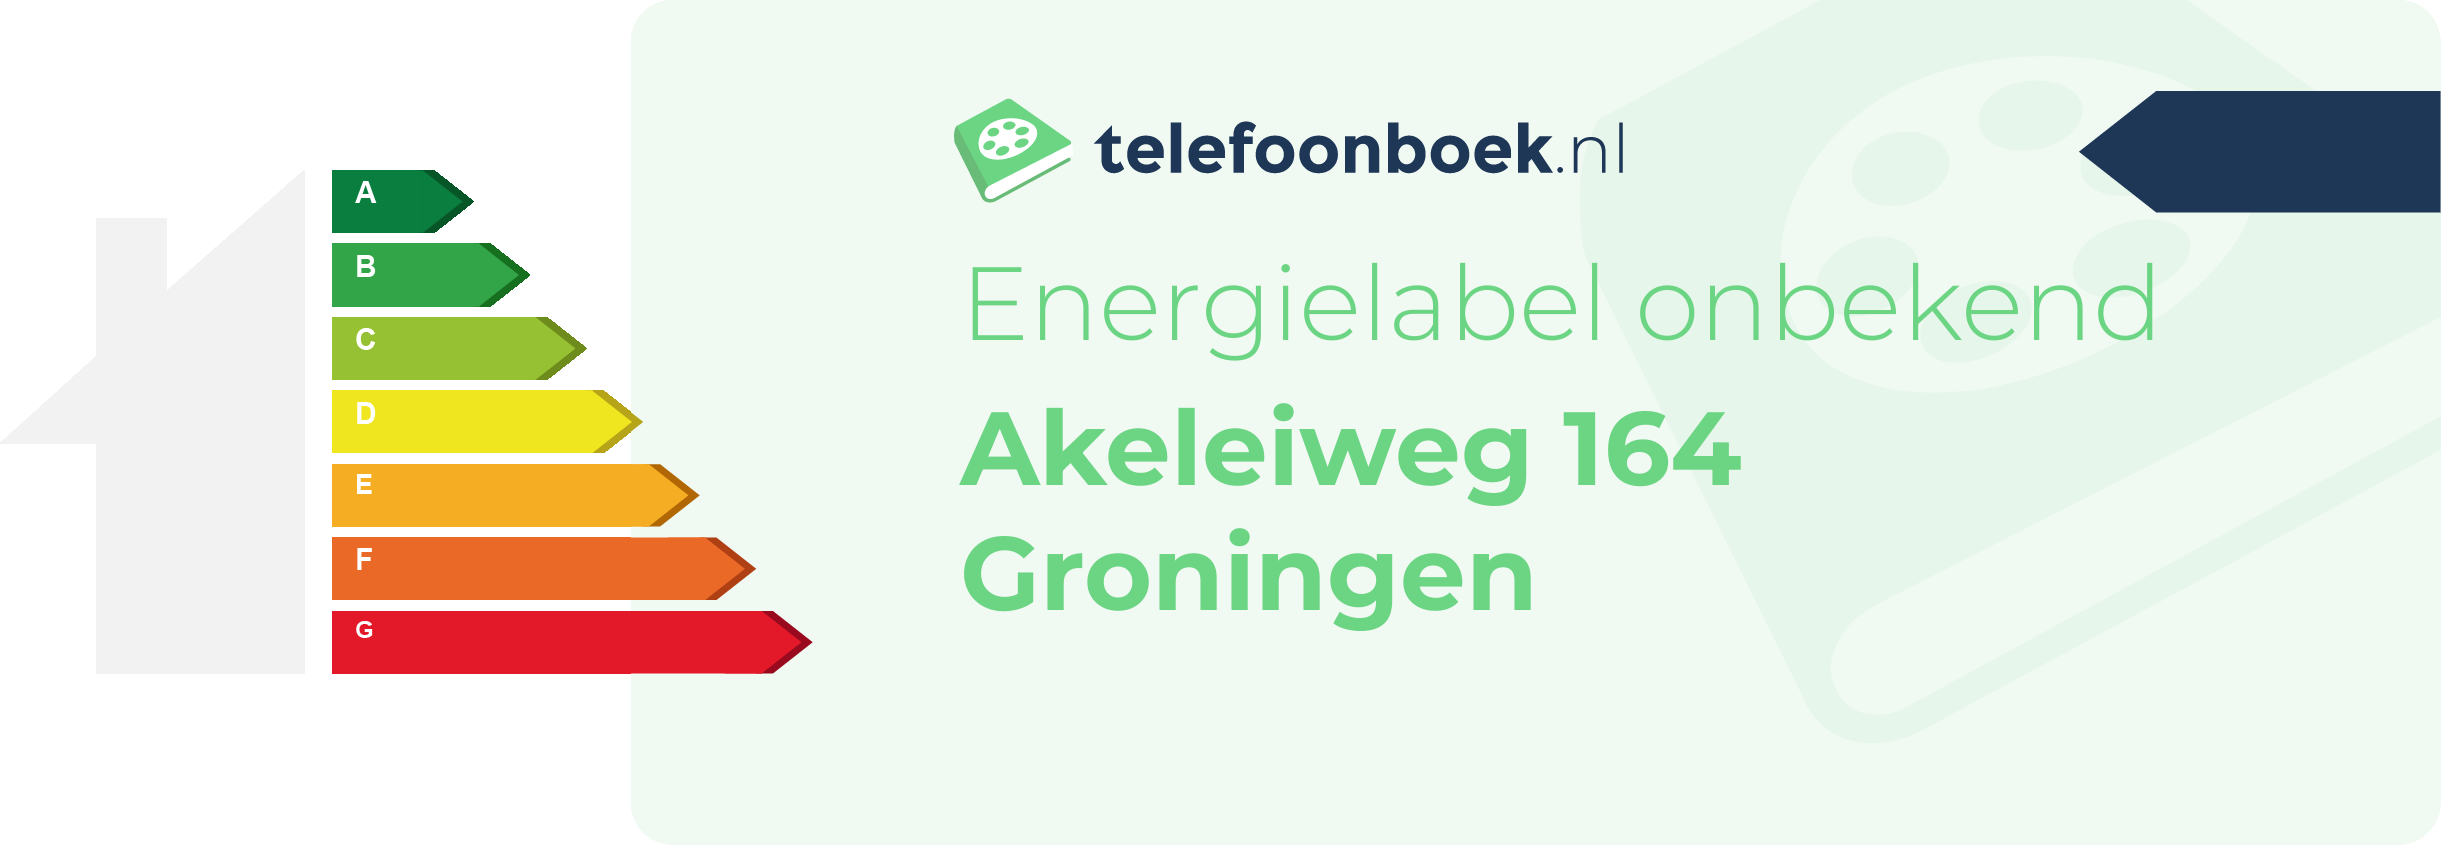 Energielabel Akeleiweg 164 Groningen